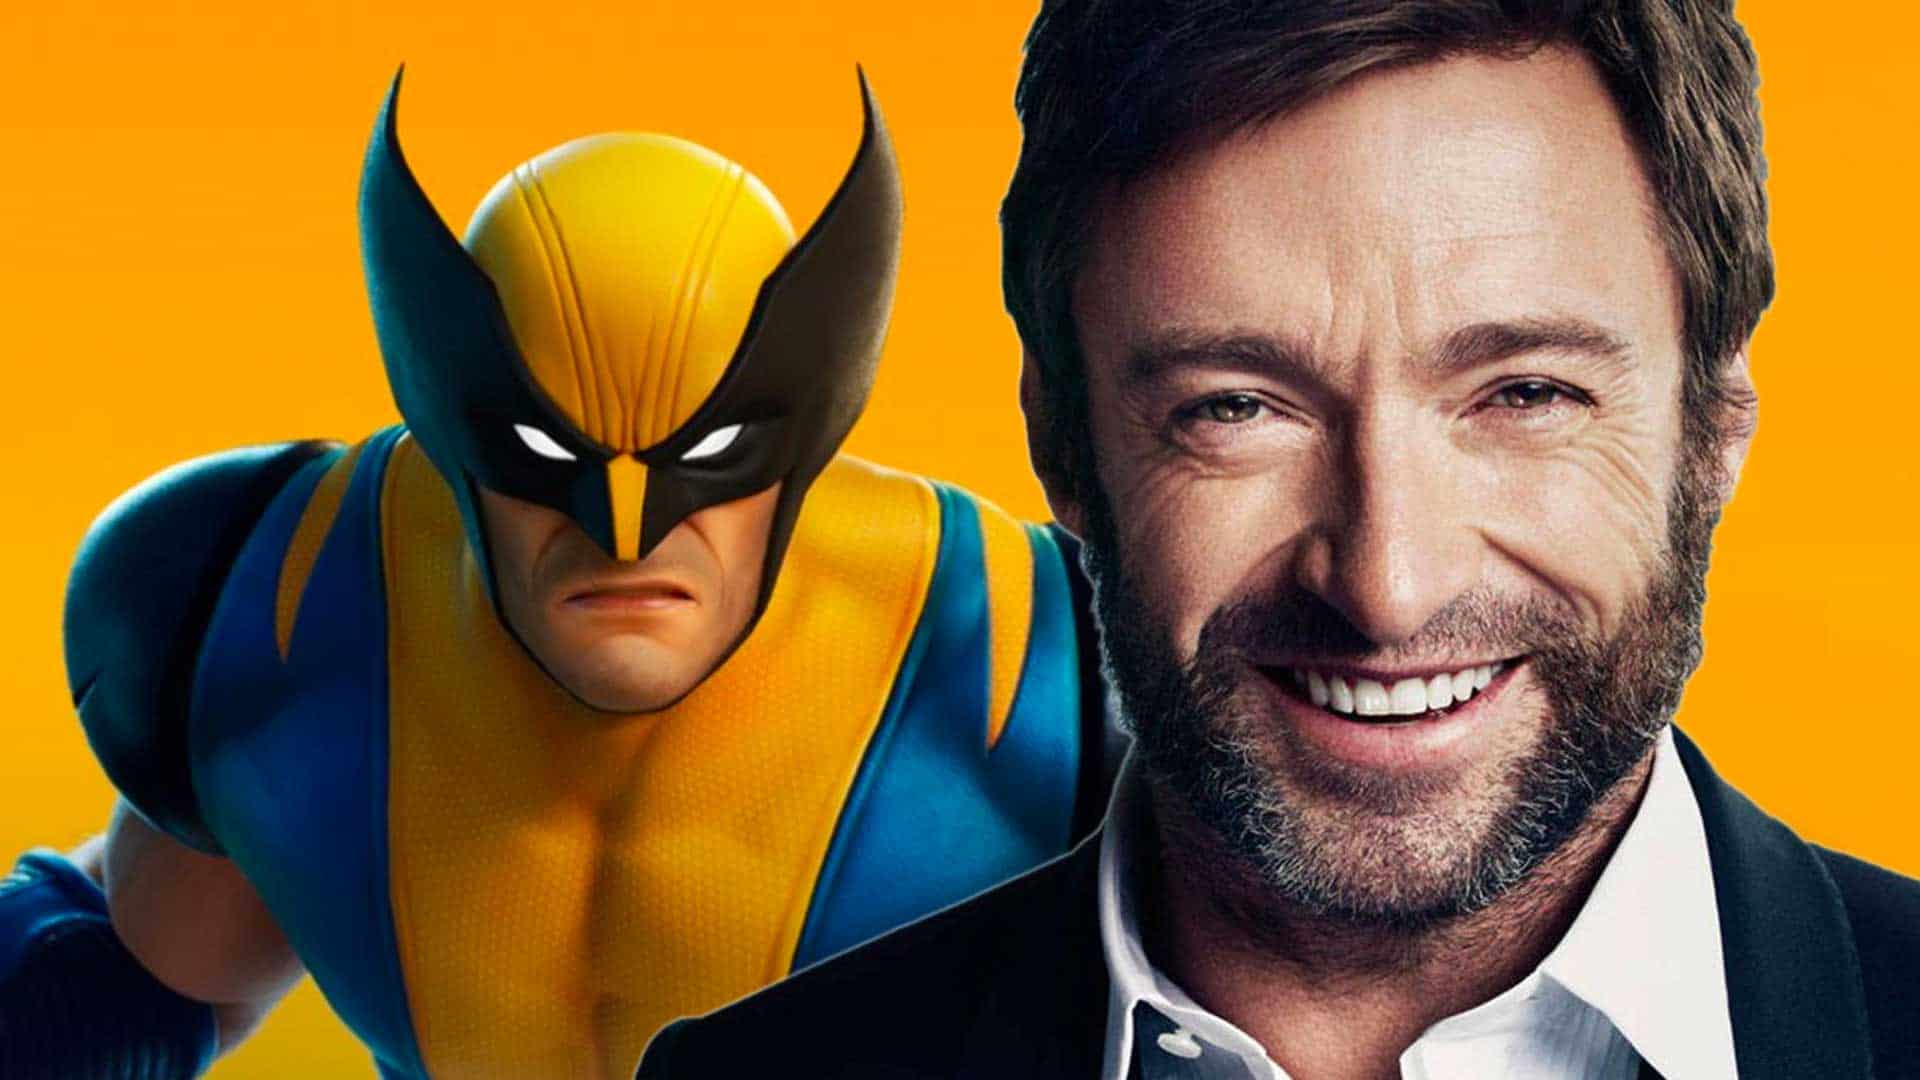 Wolverine In The MCU: Will X-Men's Hugh Jackman Return